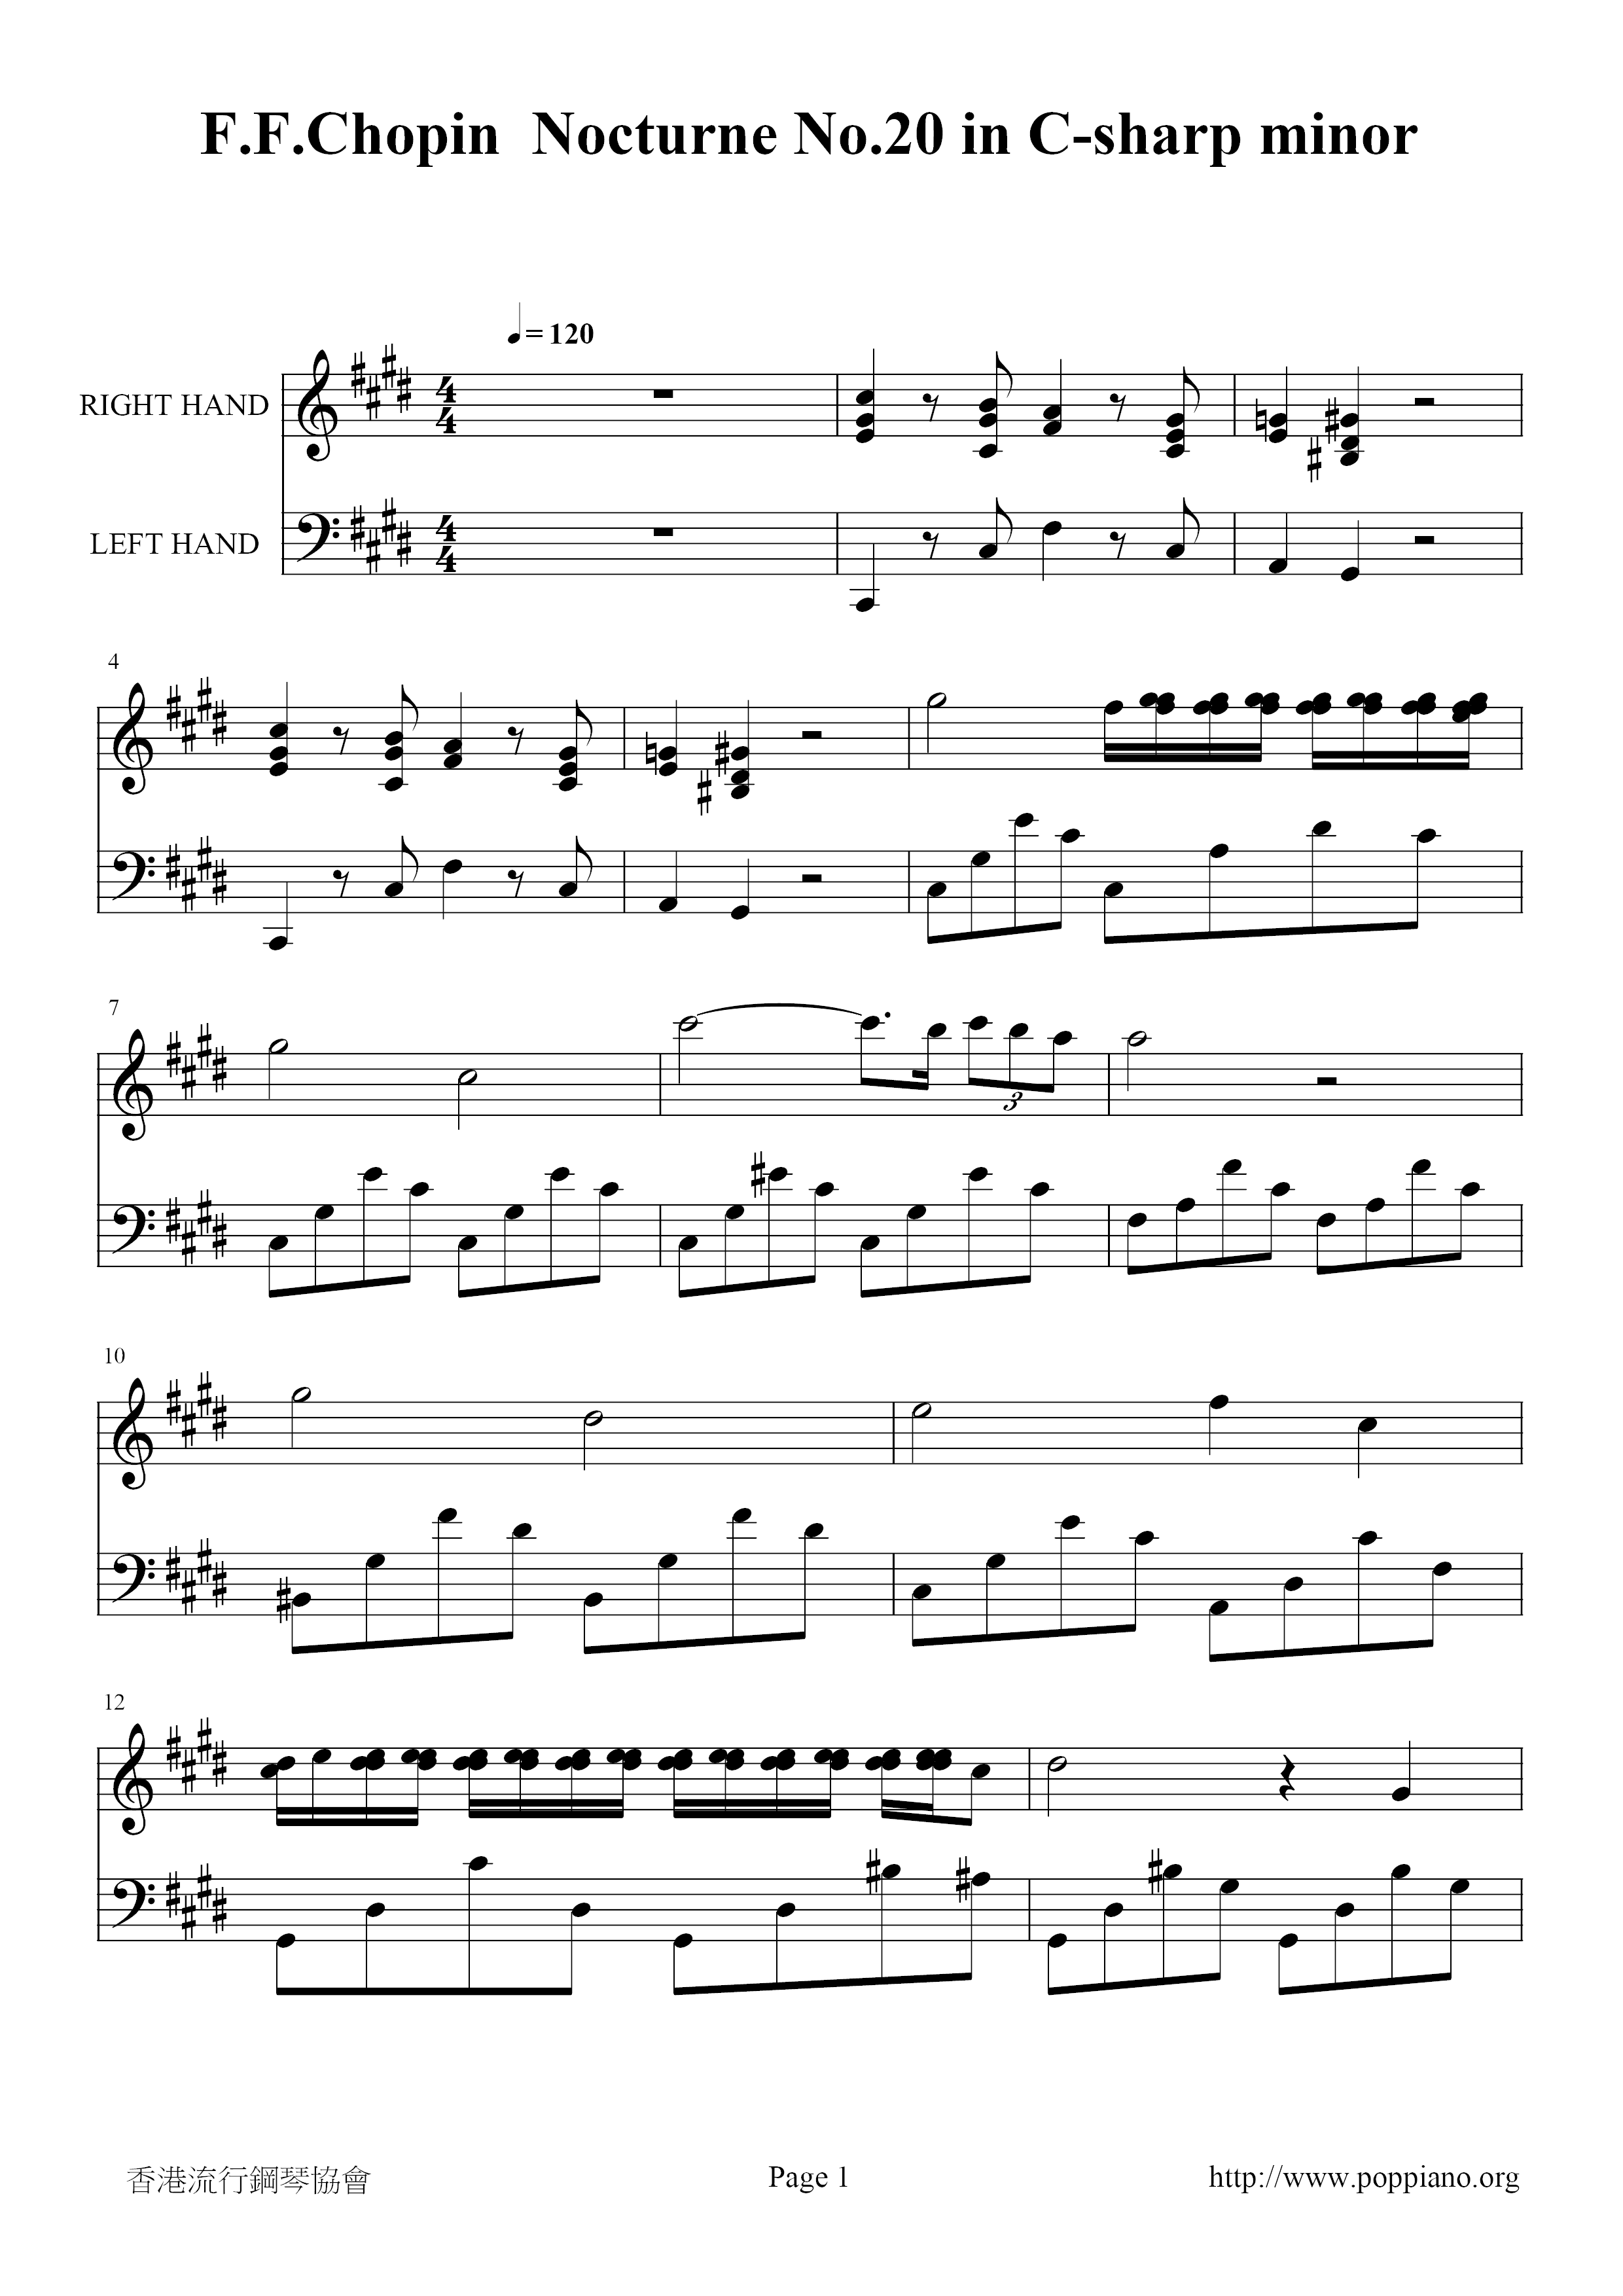 Chopin: Nocturne No. 20 in C-Sharp Minor, Op. Posth. Score